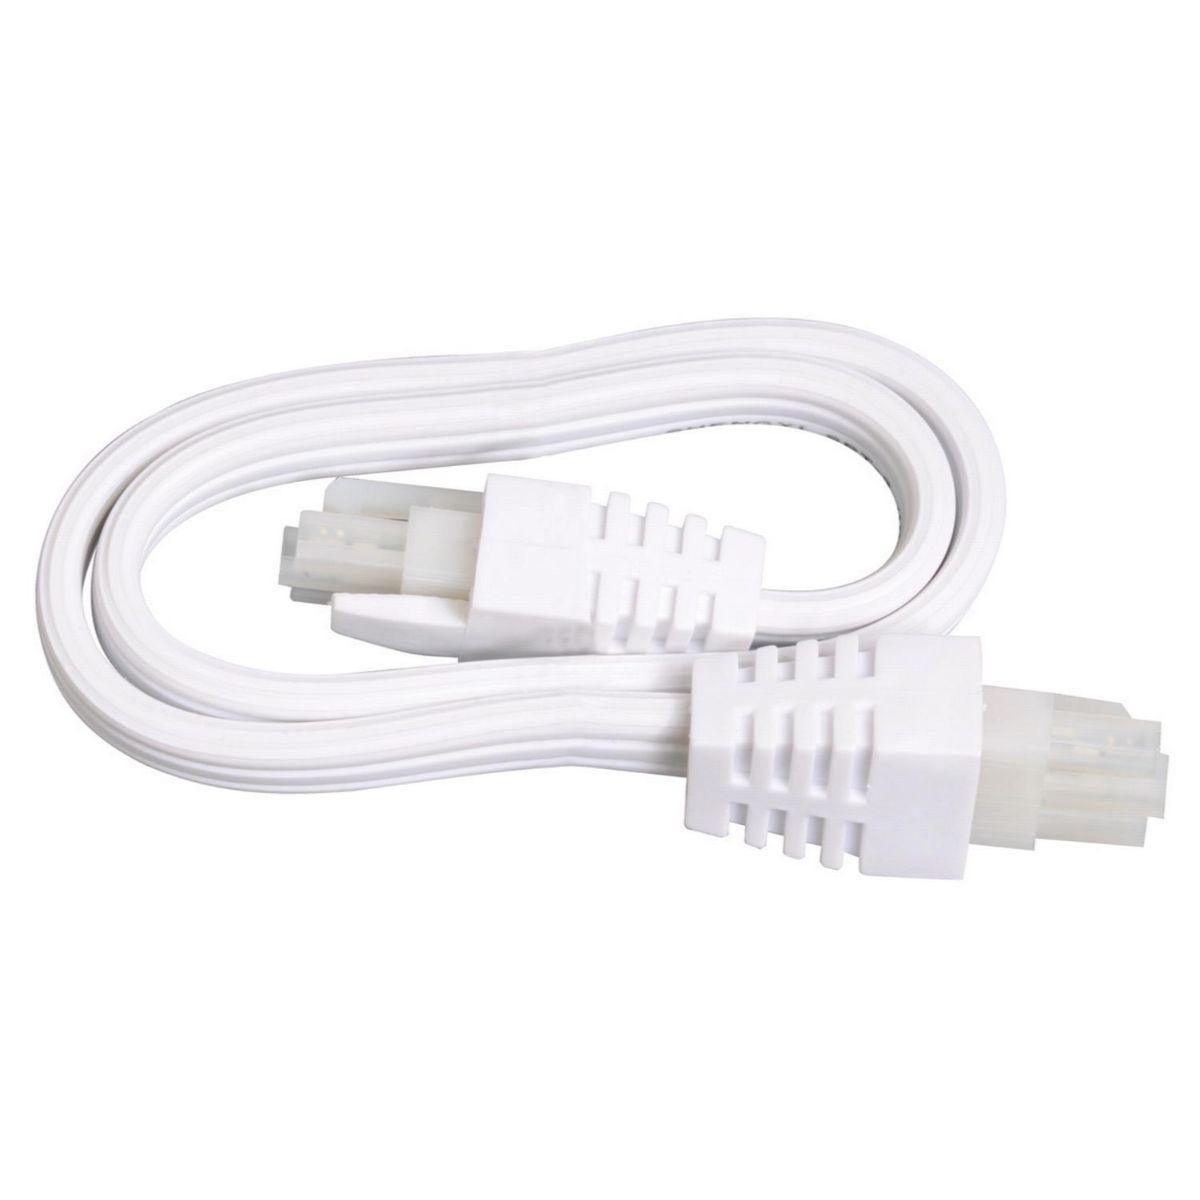 48in. Interconnect Cord for Elena Task Lighting, White